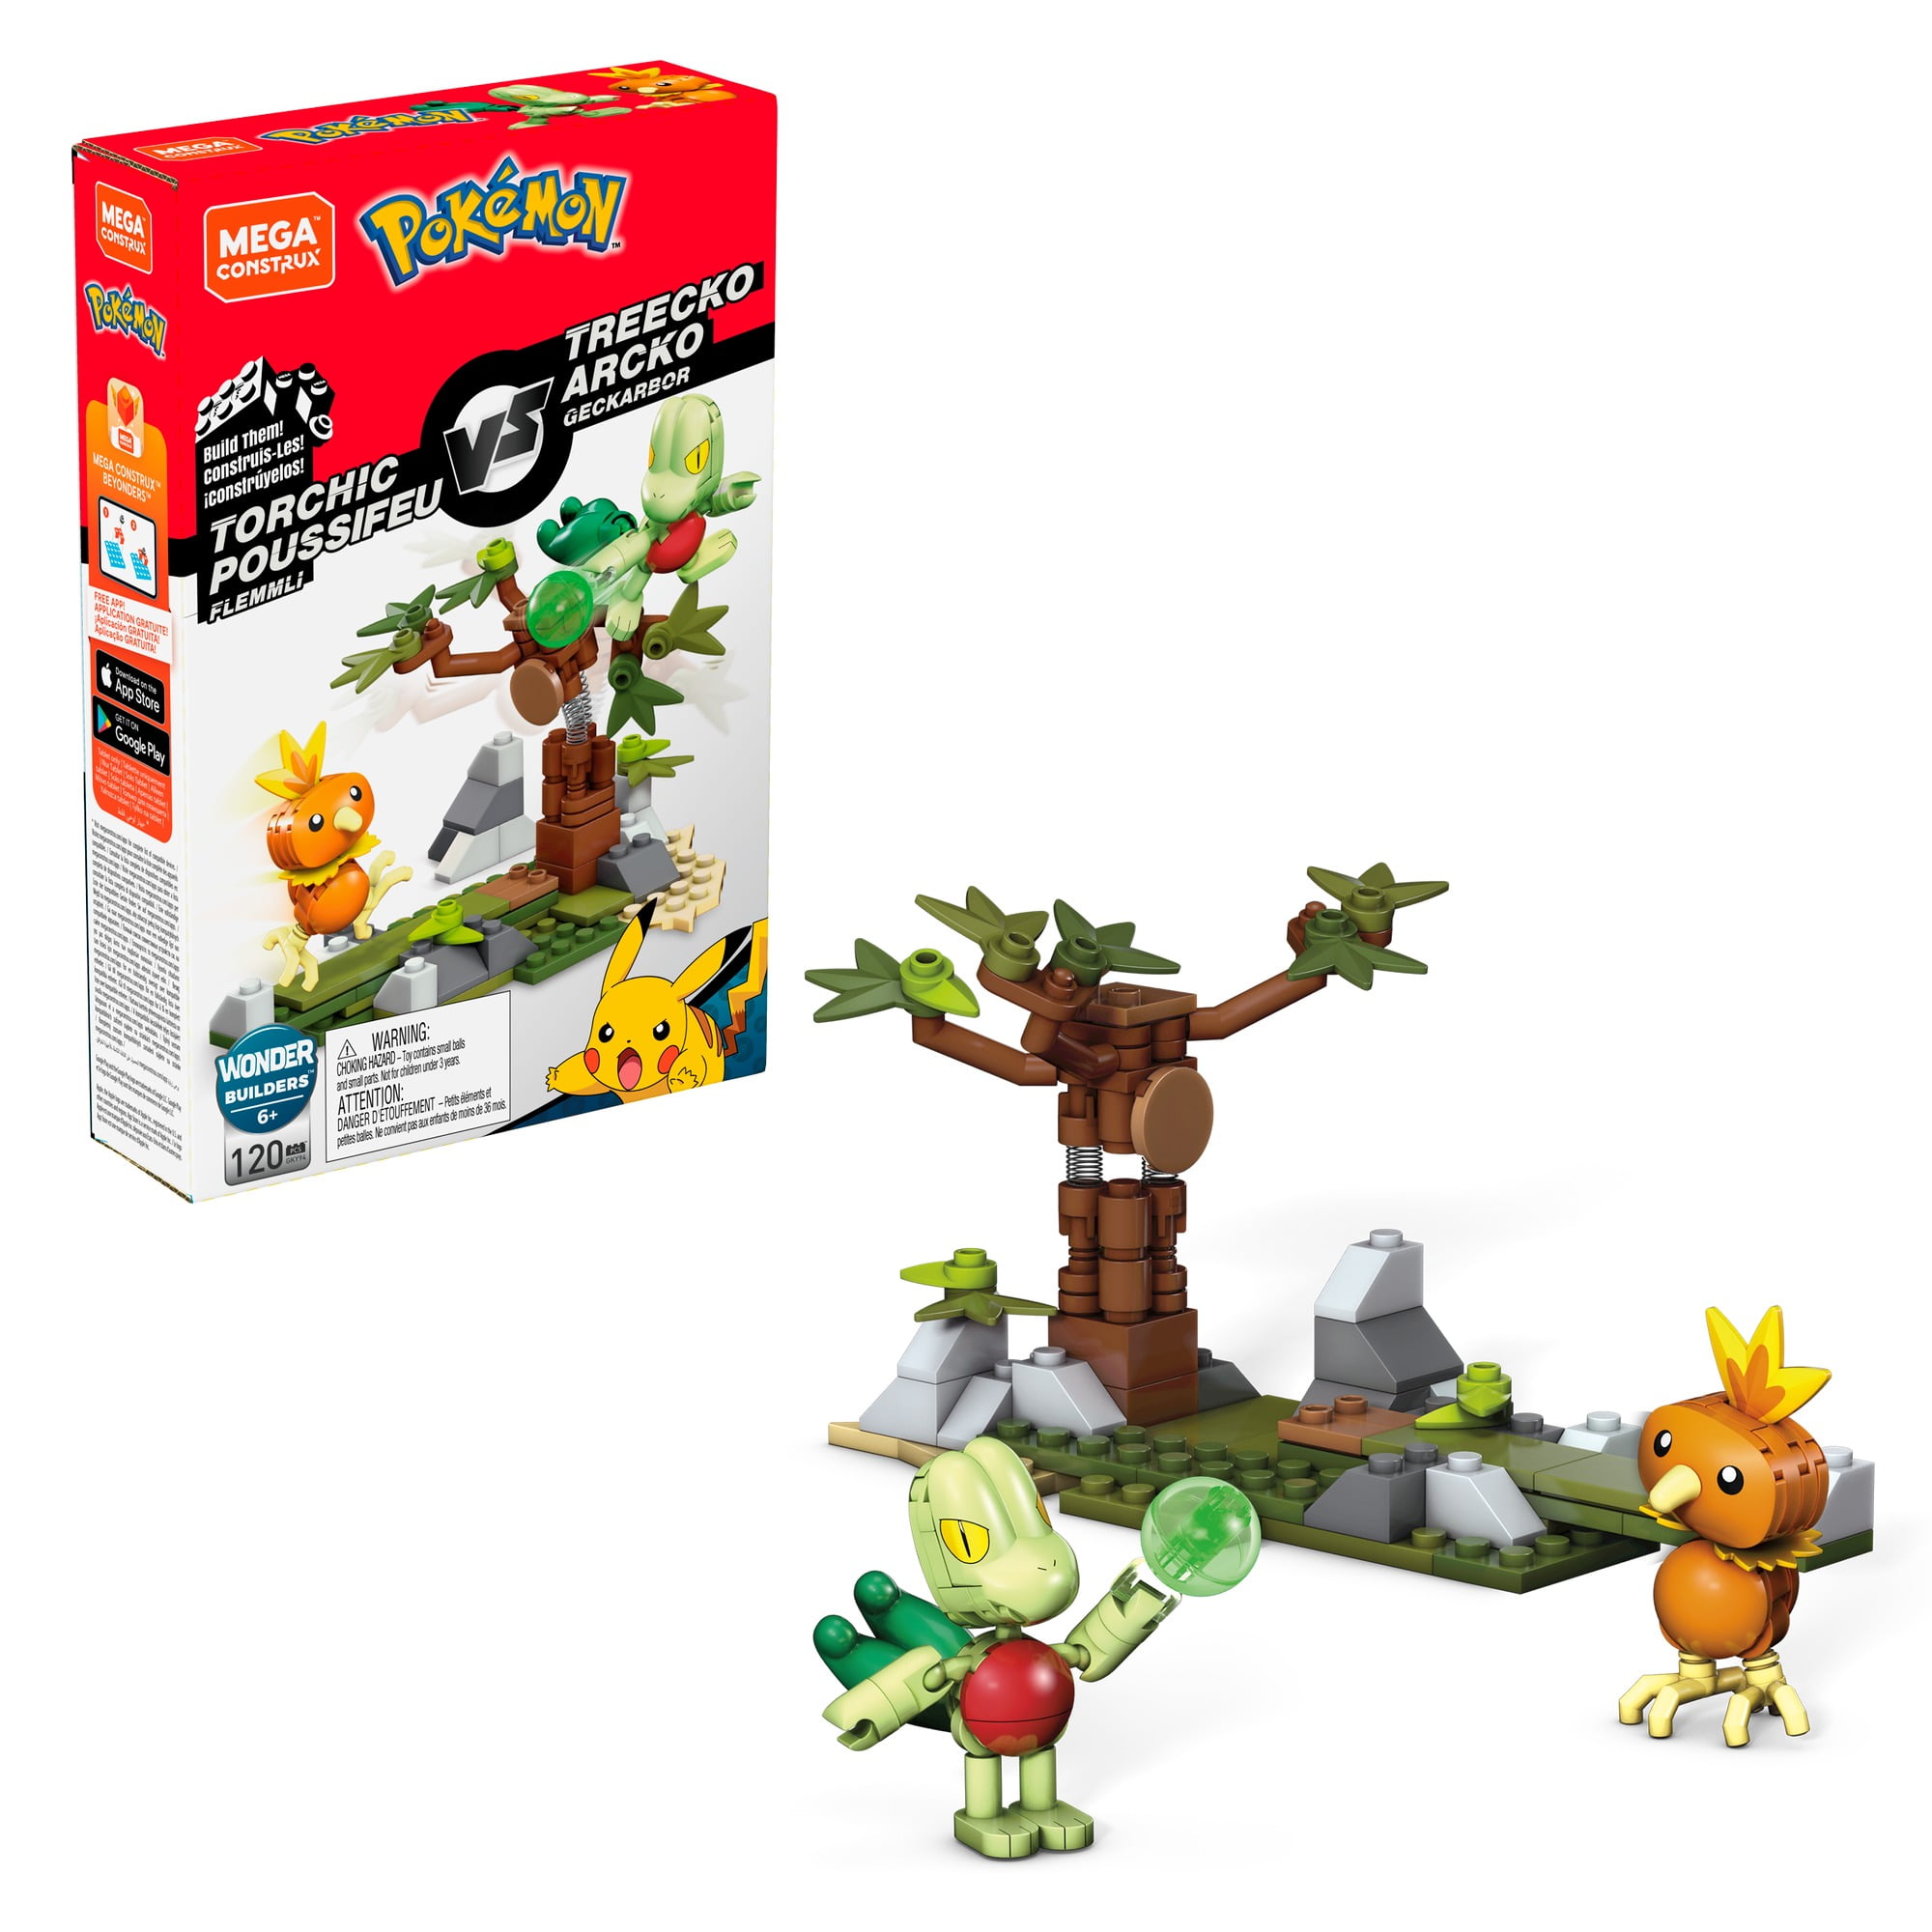 MEGA Bloks Construx Pokemon Slowpoke 80 Pcs GDW31 for sale online 